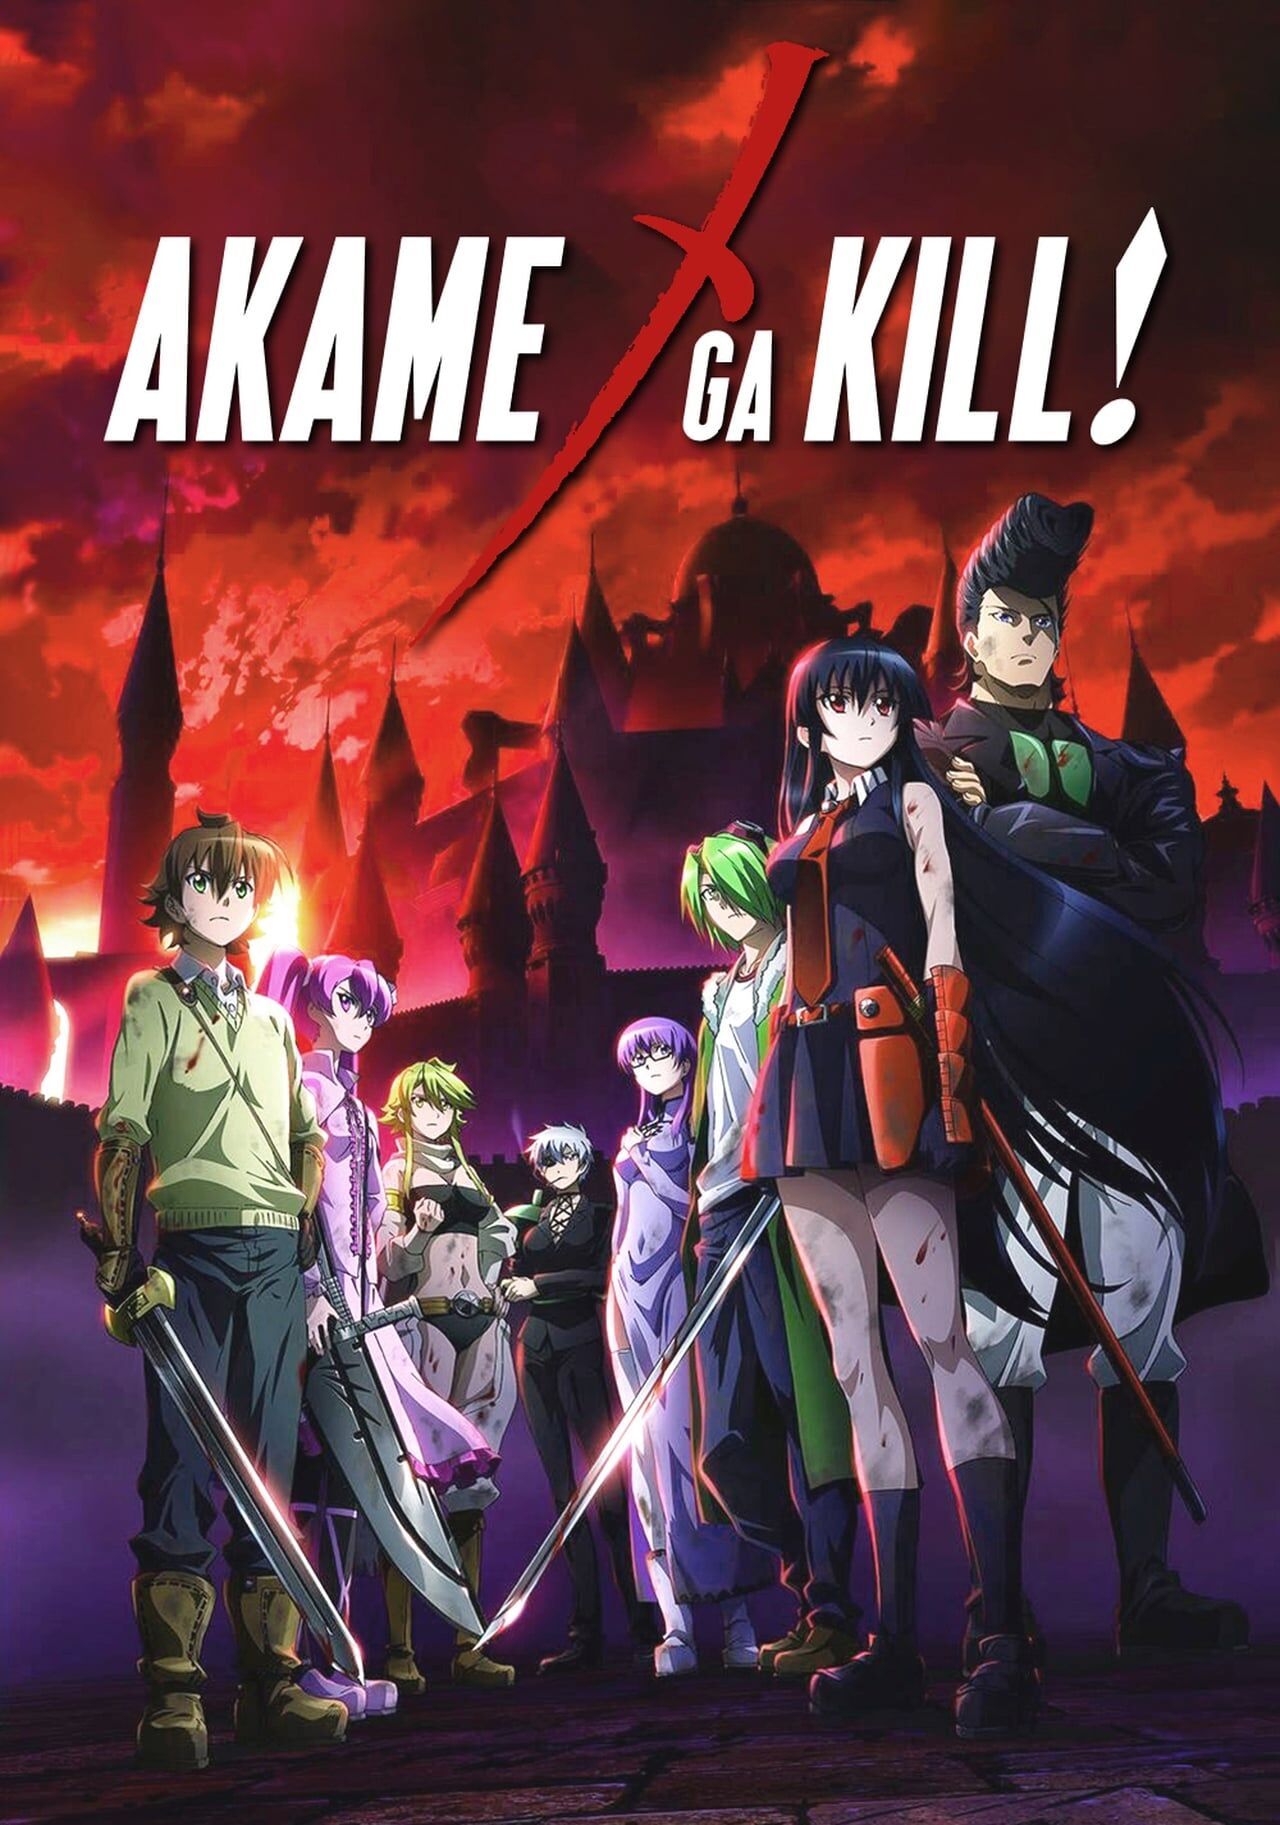 Akame Ga Kill Series Review: Kill Everything - ConFreaks & Geeks